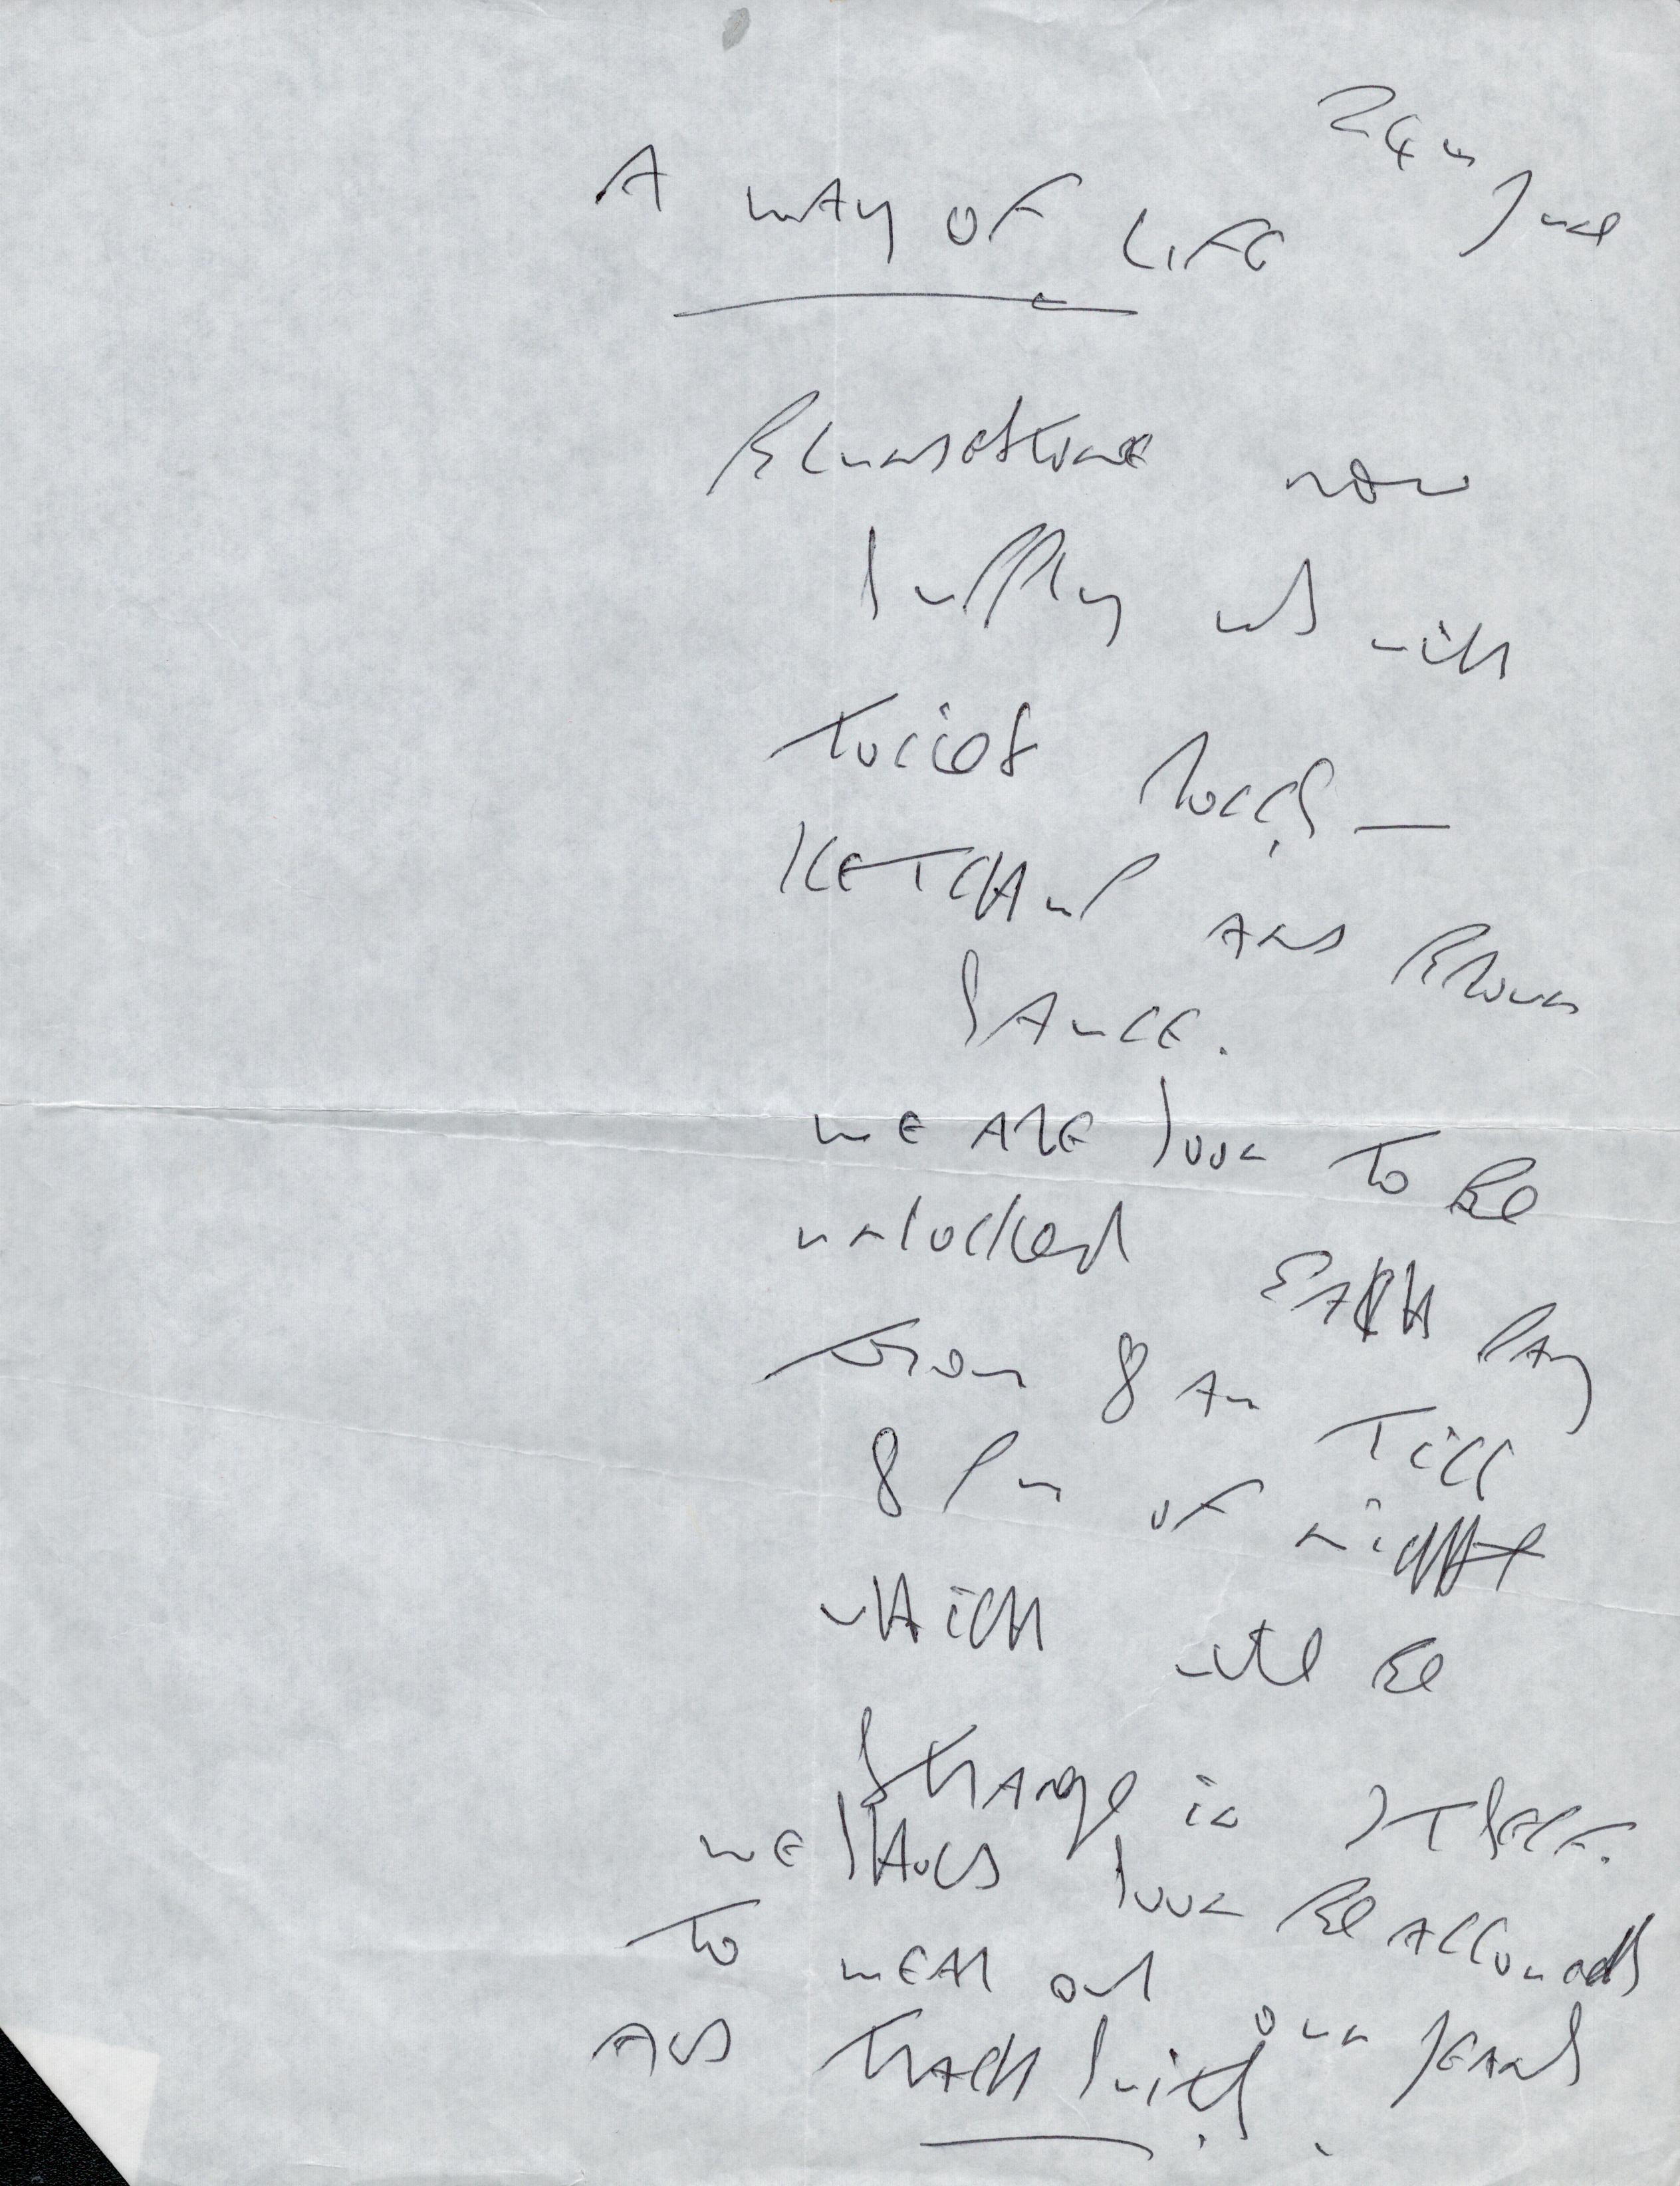 Historic Reggie Kray Handwritten Poem Titled 'A Way Of Life' on 24th July. Written in black biro